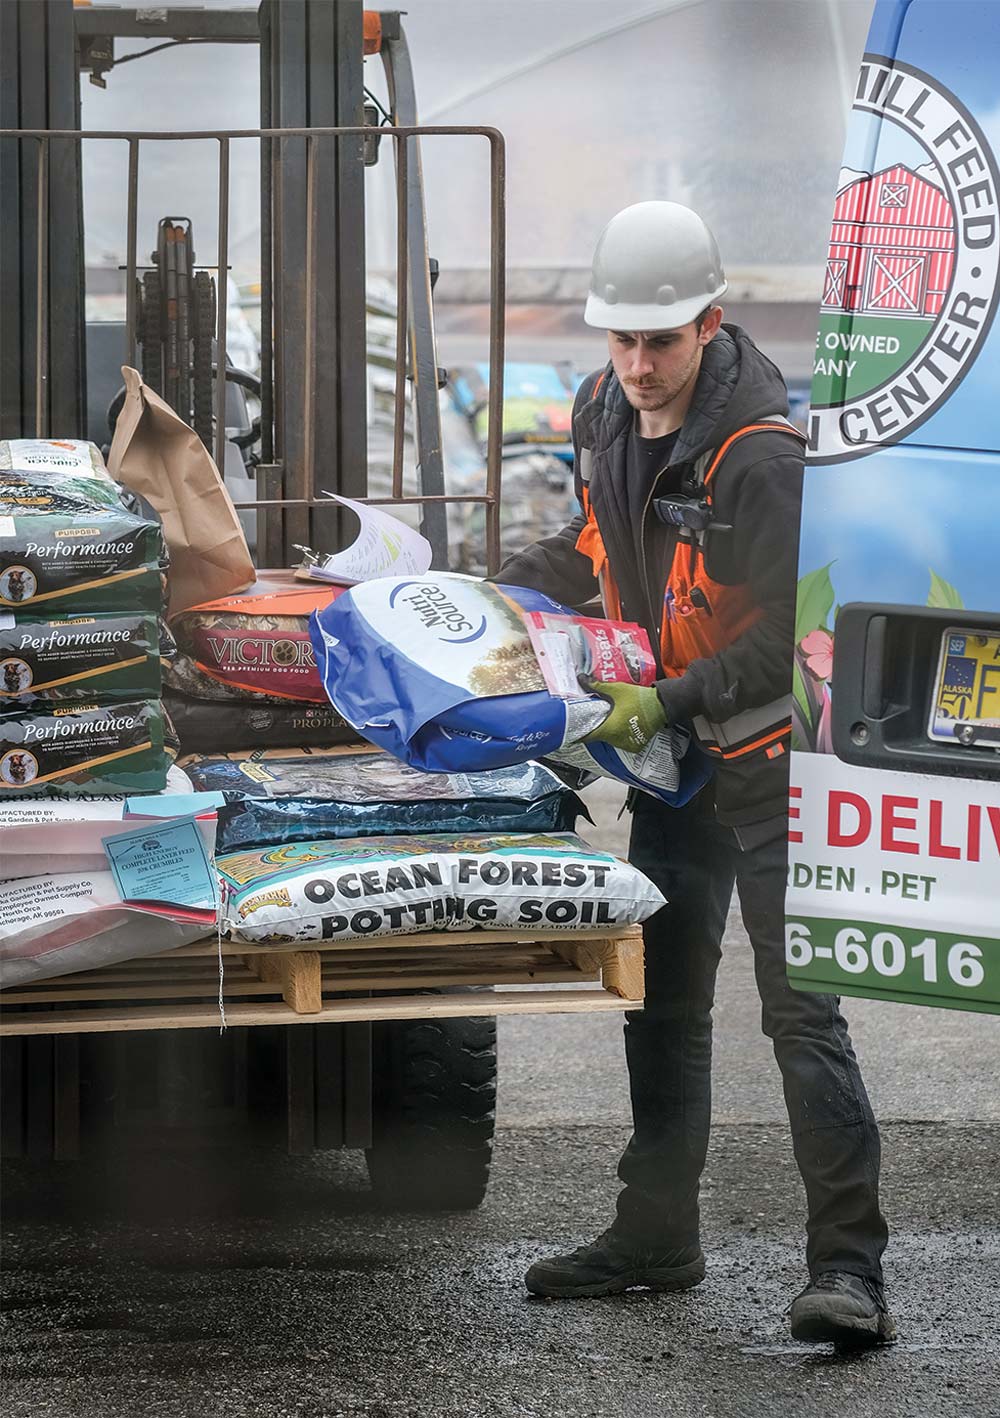 Alaska Mill & Feed employee unloading bags from van